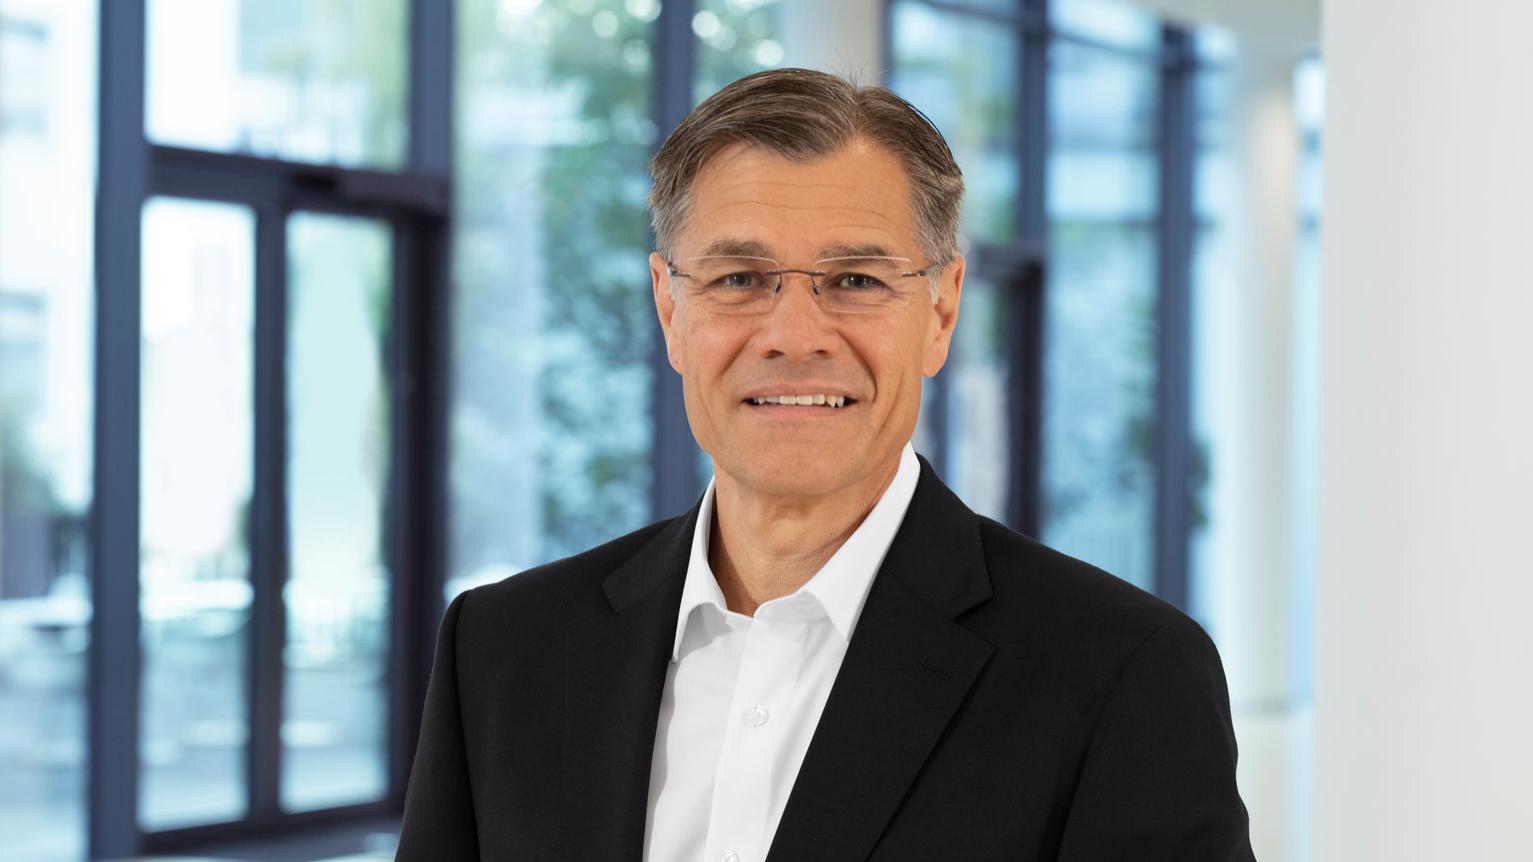 Dr. Karl Lamprecht, President & CEO of Carl Zeiss AG